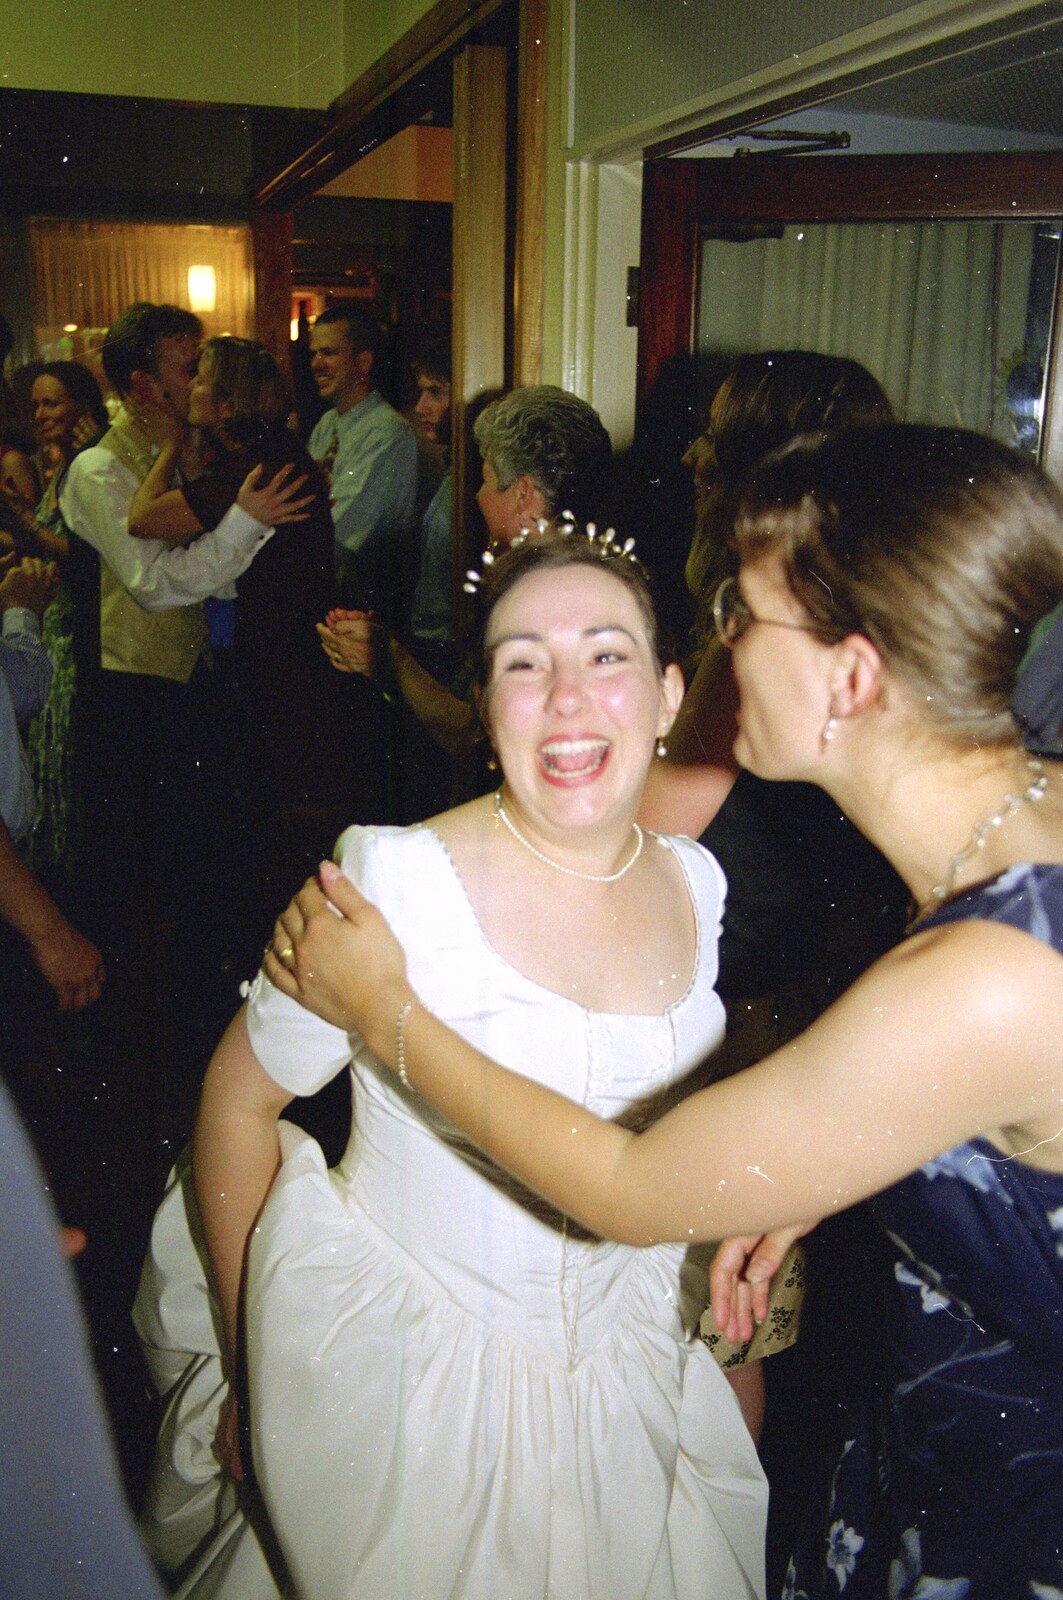 Lesley gets a kiss from Joe and Lesley's CISU Wedding, Ipswich, Suffolk - 30th July 1998